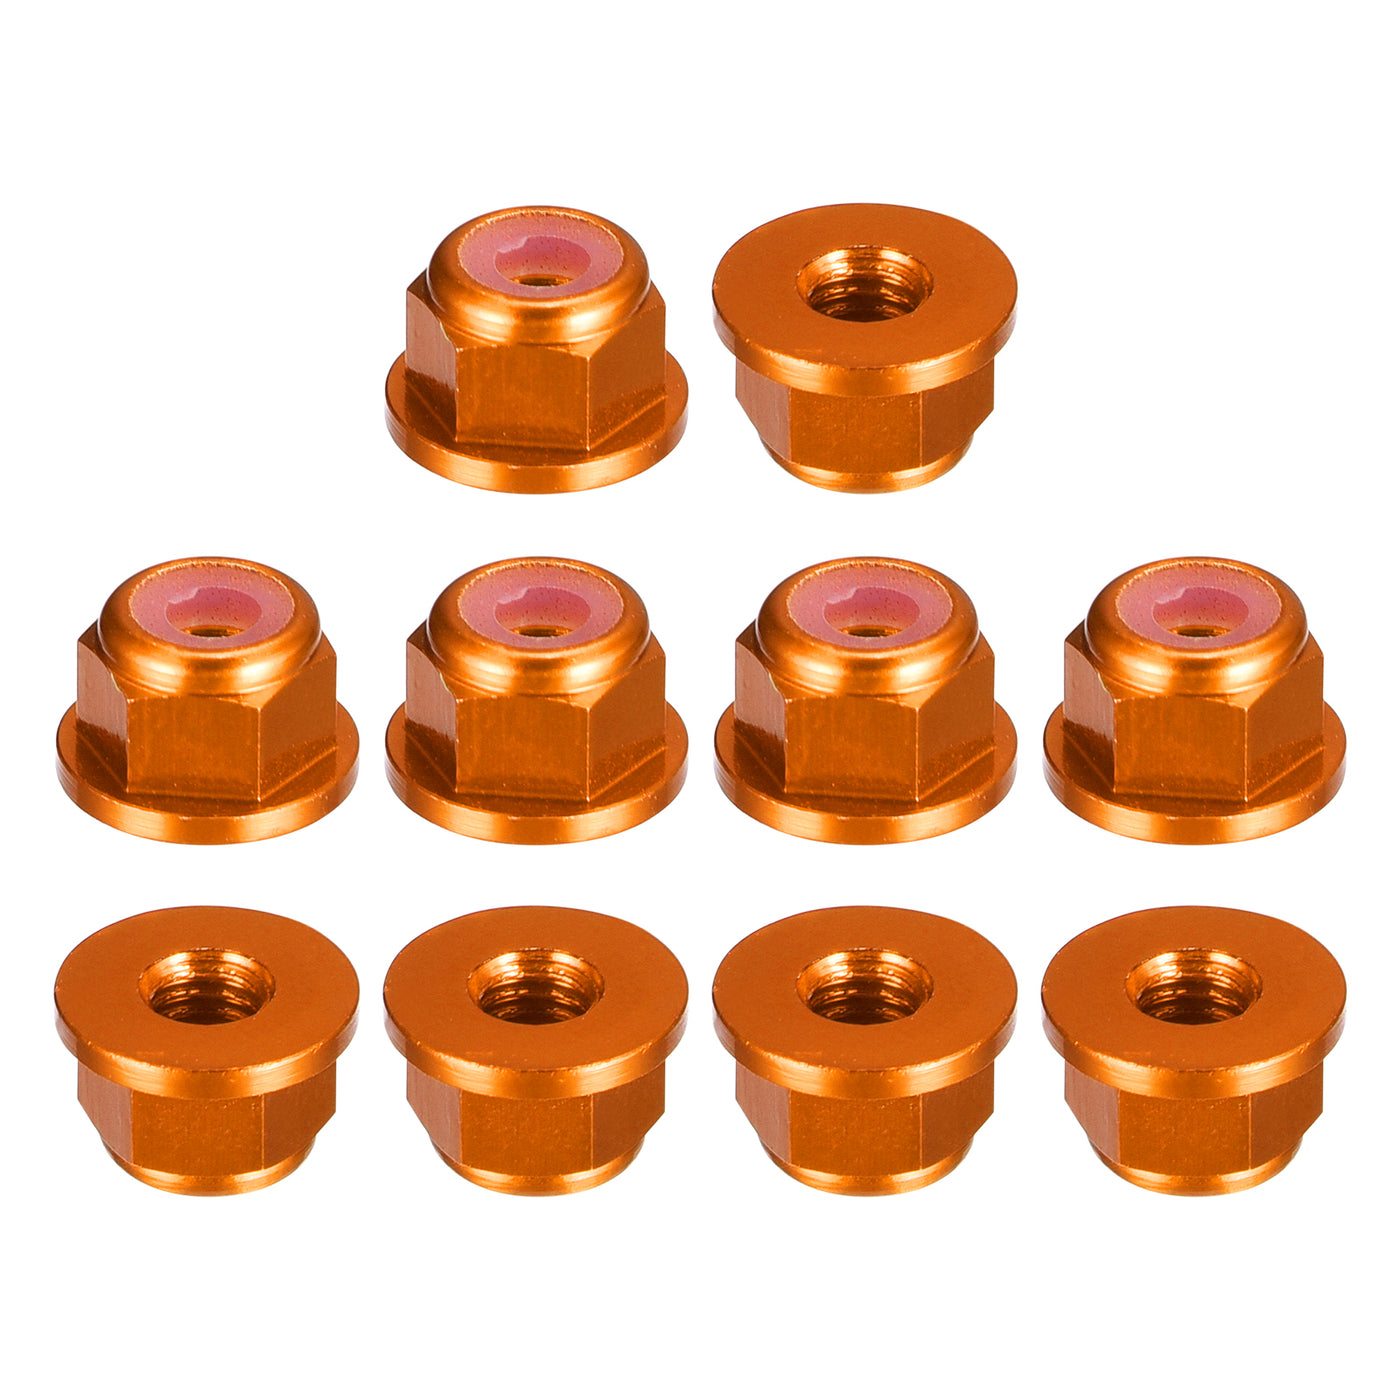 uxcell Uxcell Nylon Insert Hex Lock Nuts, 10pcs - M3 x 0.5mm Aluminum Alloy Self-Locking Nut, Anodizing Flange Lock Nut for Fasteners (Orange)